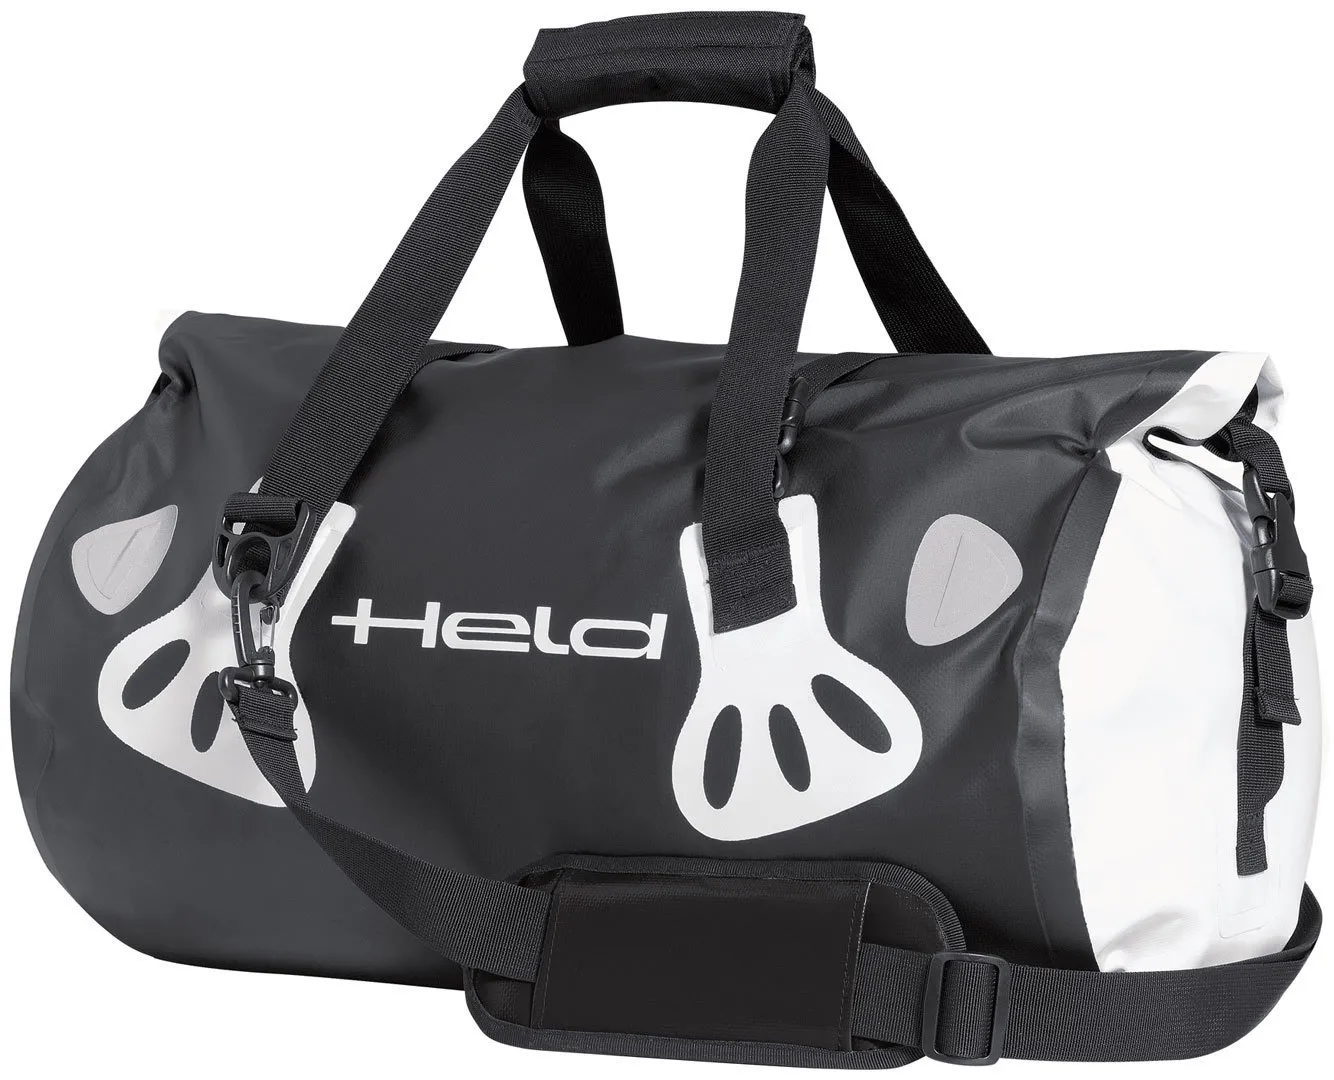 Held Carry-Bag Bagage tas, zwart-wit, 21-30l